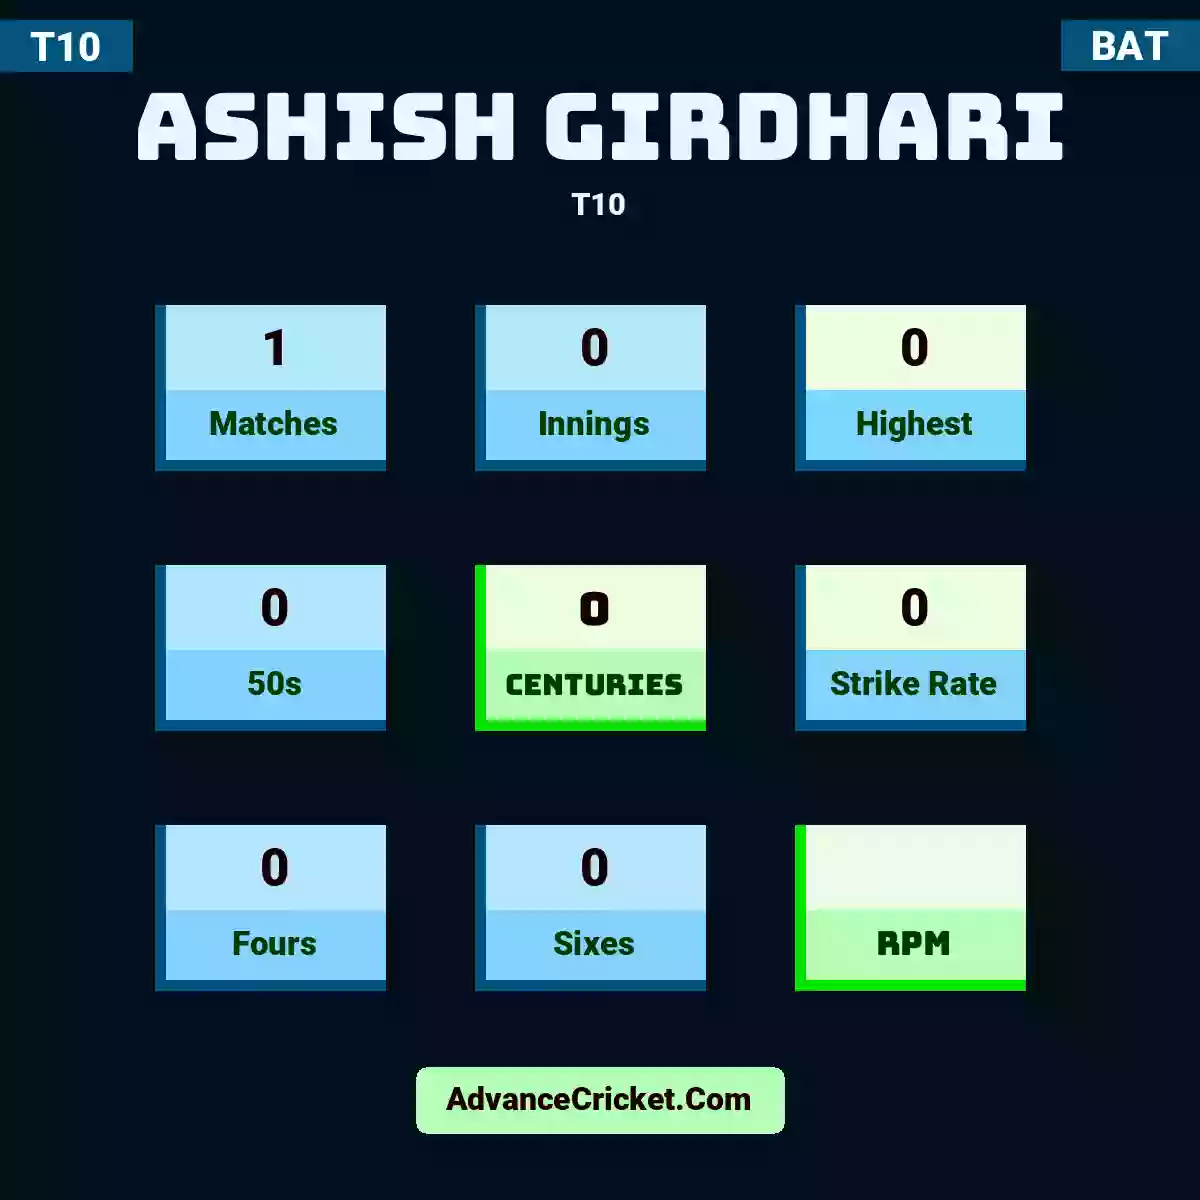 Ashish Girdhari T10 , Ashish Girdhari played 1 matches, scored 0 runs as highest, 0 half-centuries, and 0 centuries, with a strike rate of 0. A.Girdhari hit 0 fours and 0 sixes.